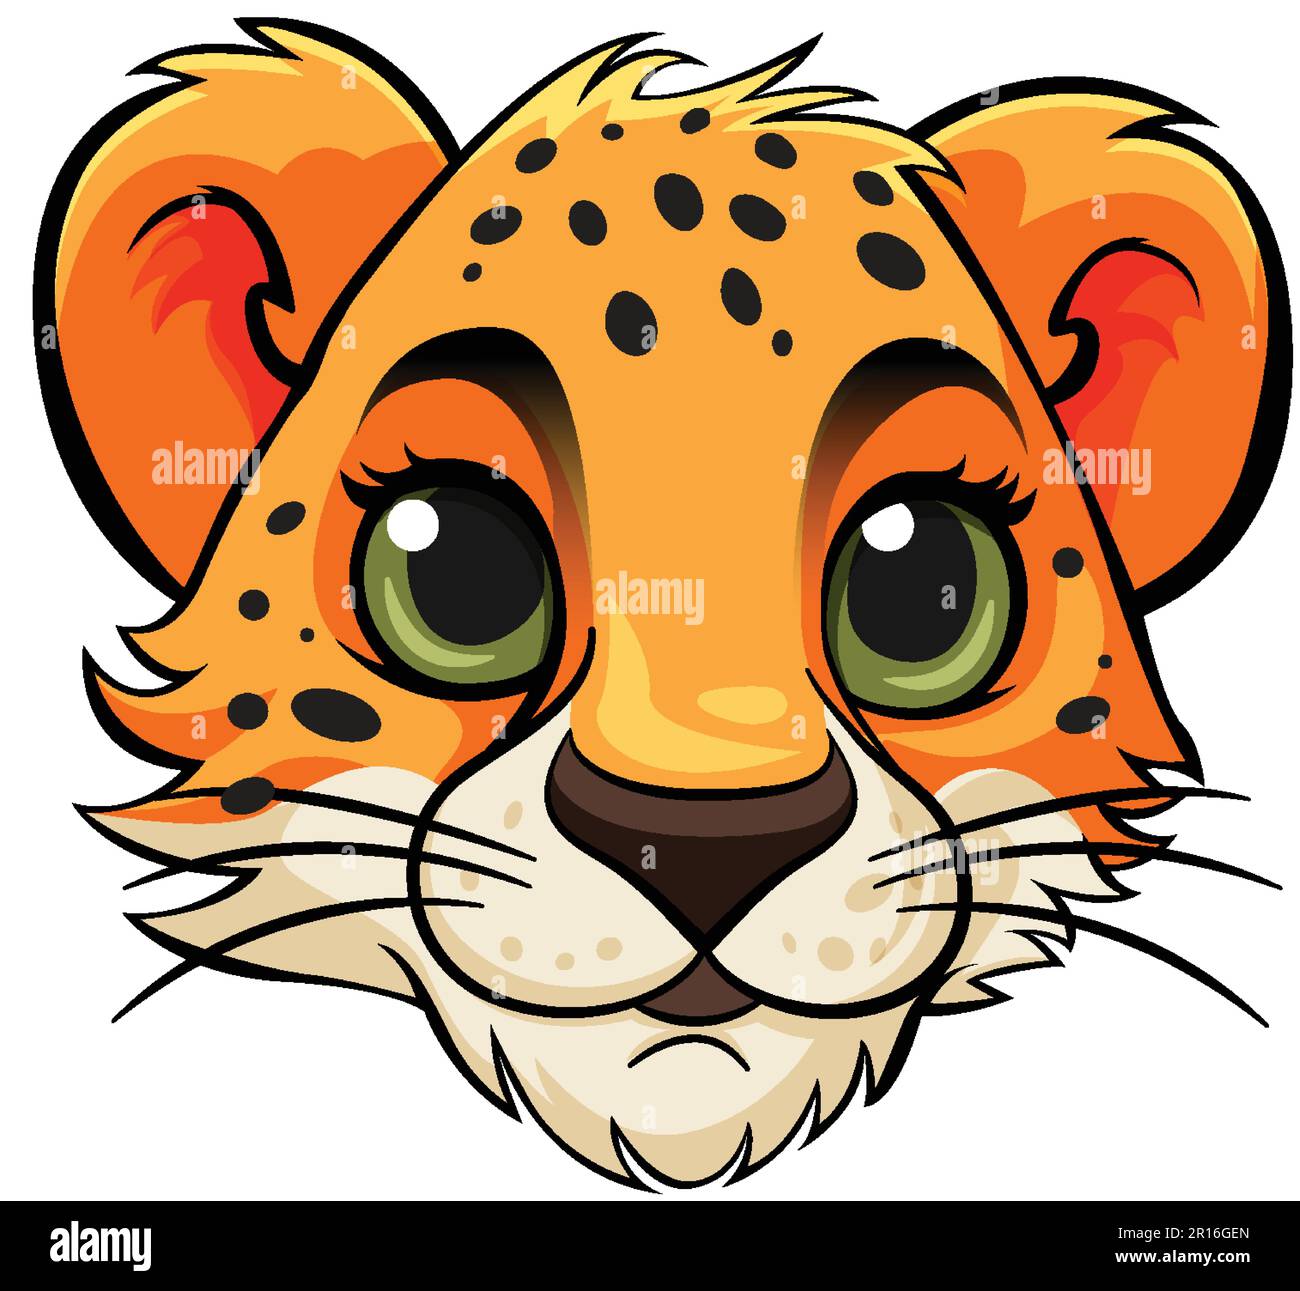 Baby Cheetah Face In Cartoon Style illustration Stock Vector Image ...